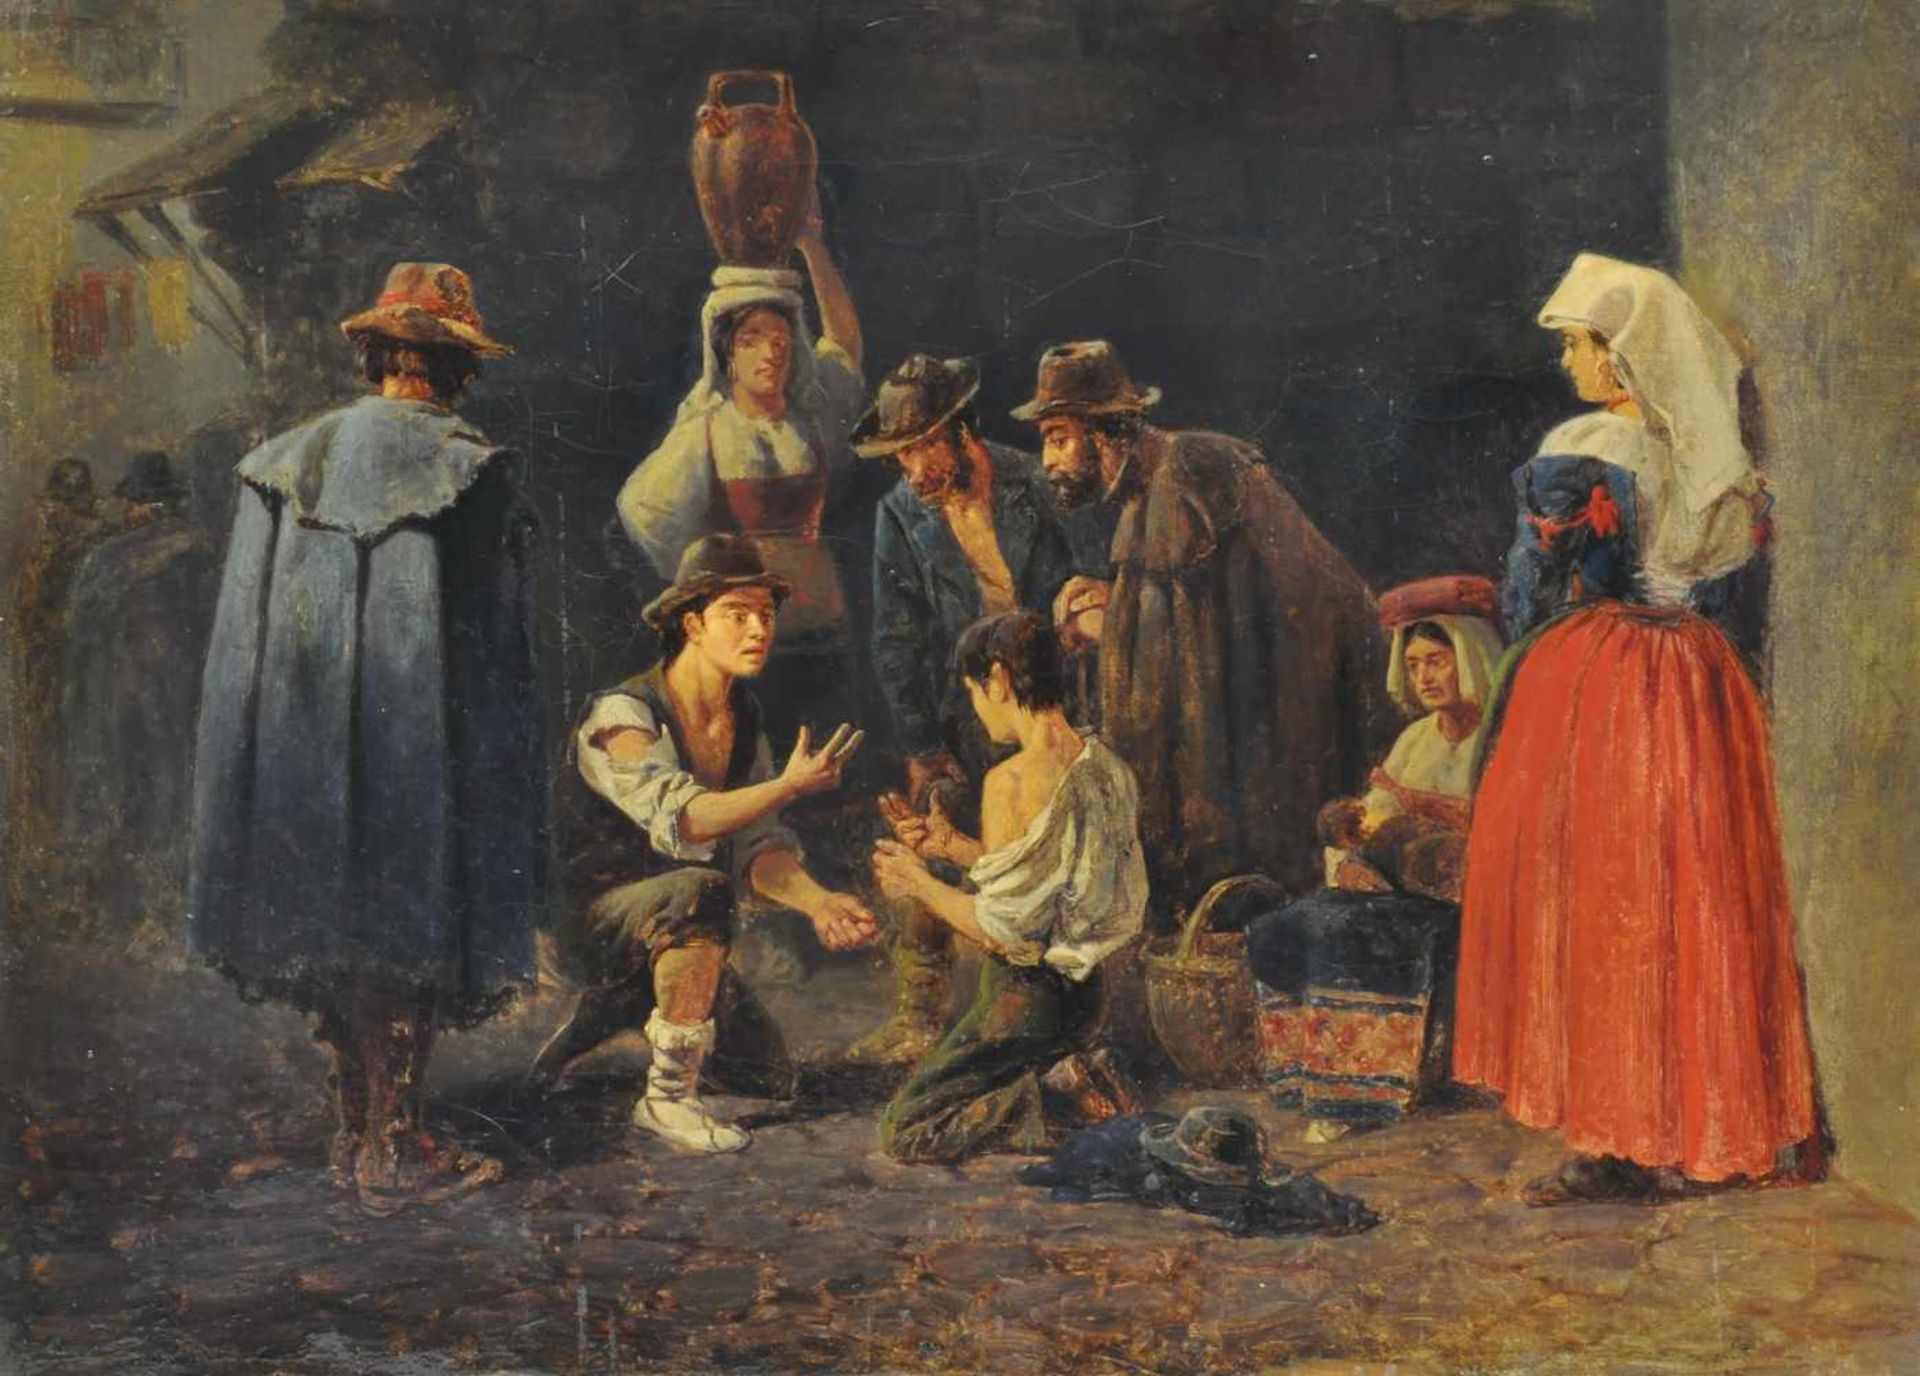 Ancarkrona, Henrik August (1831 - 1917 Stockholm) Beim Würfeln, Öl auf Lw., 27,5 x 37,5 cm, links